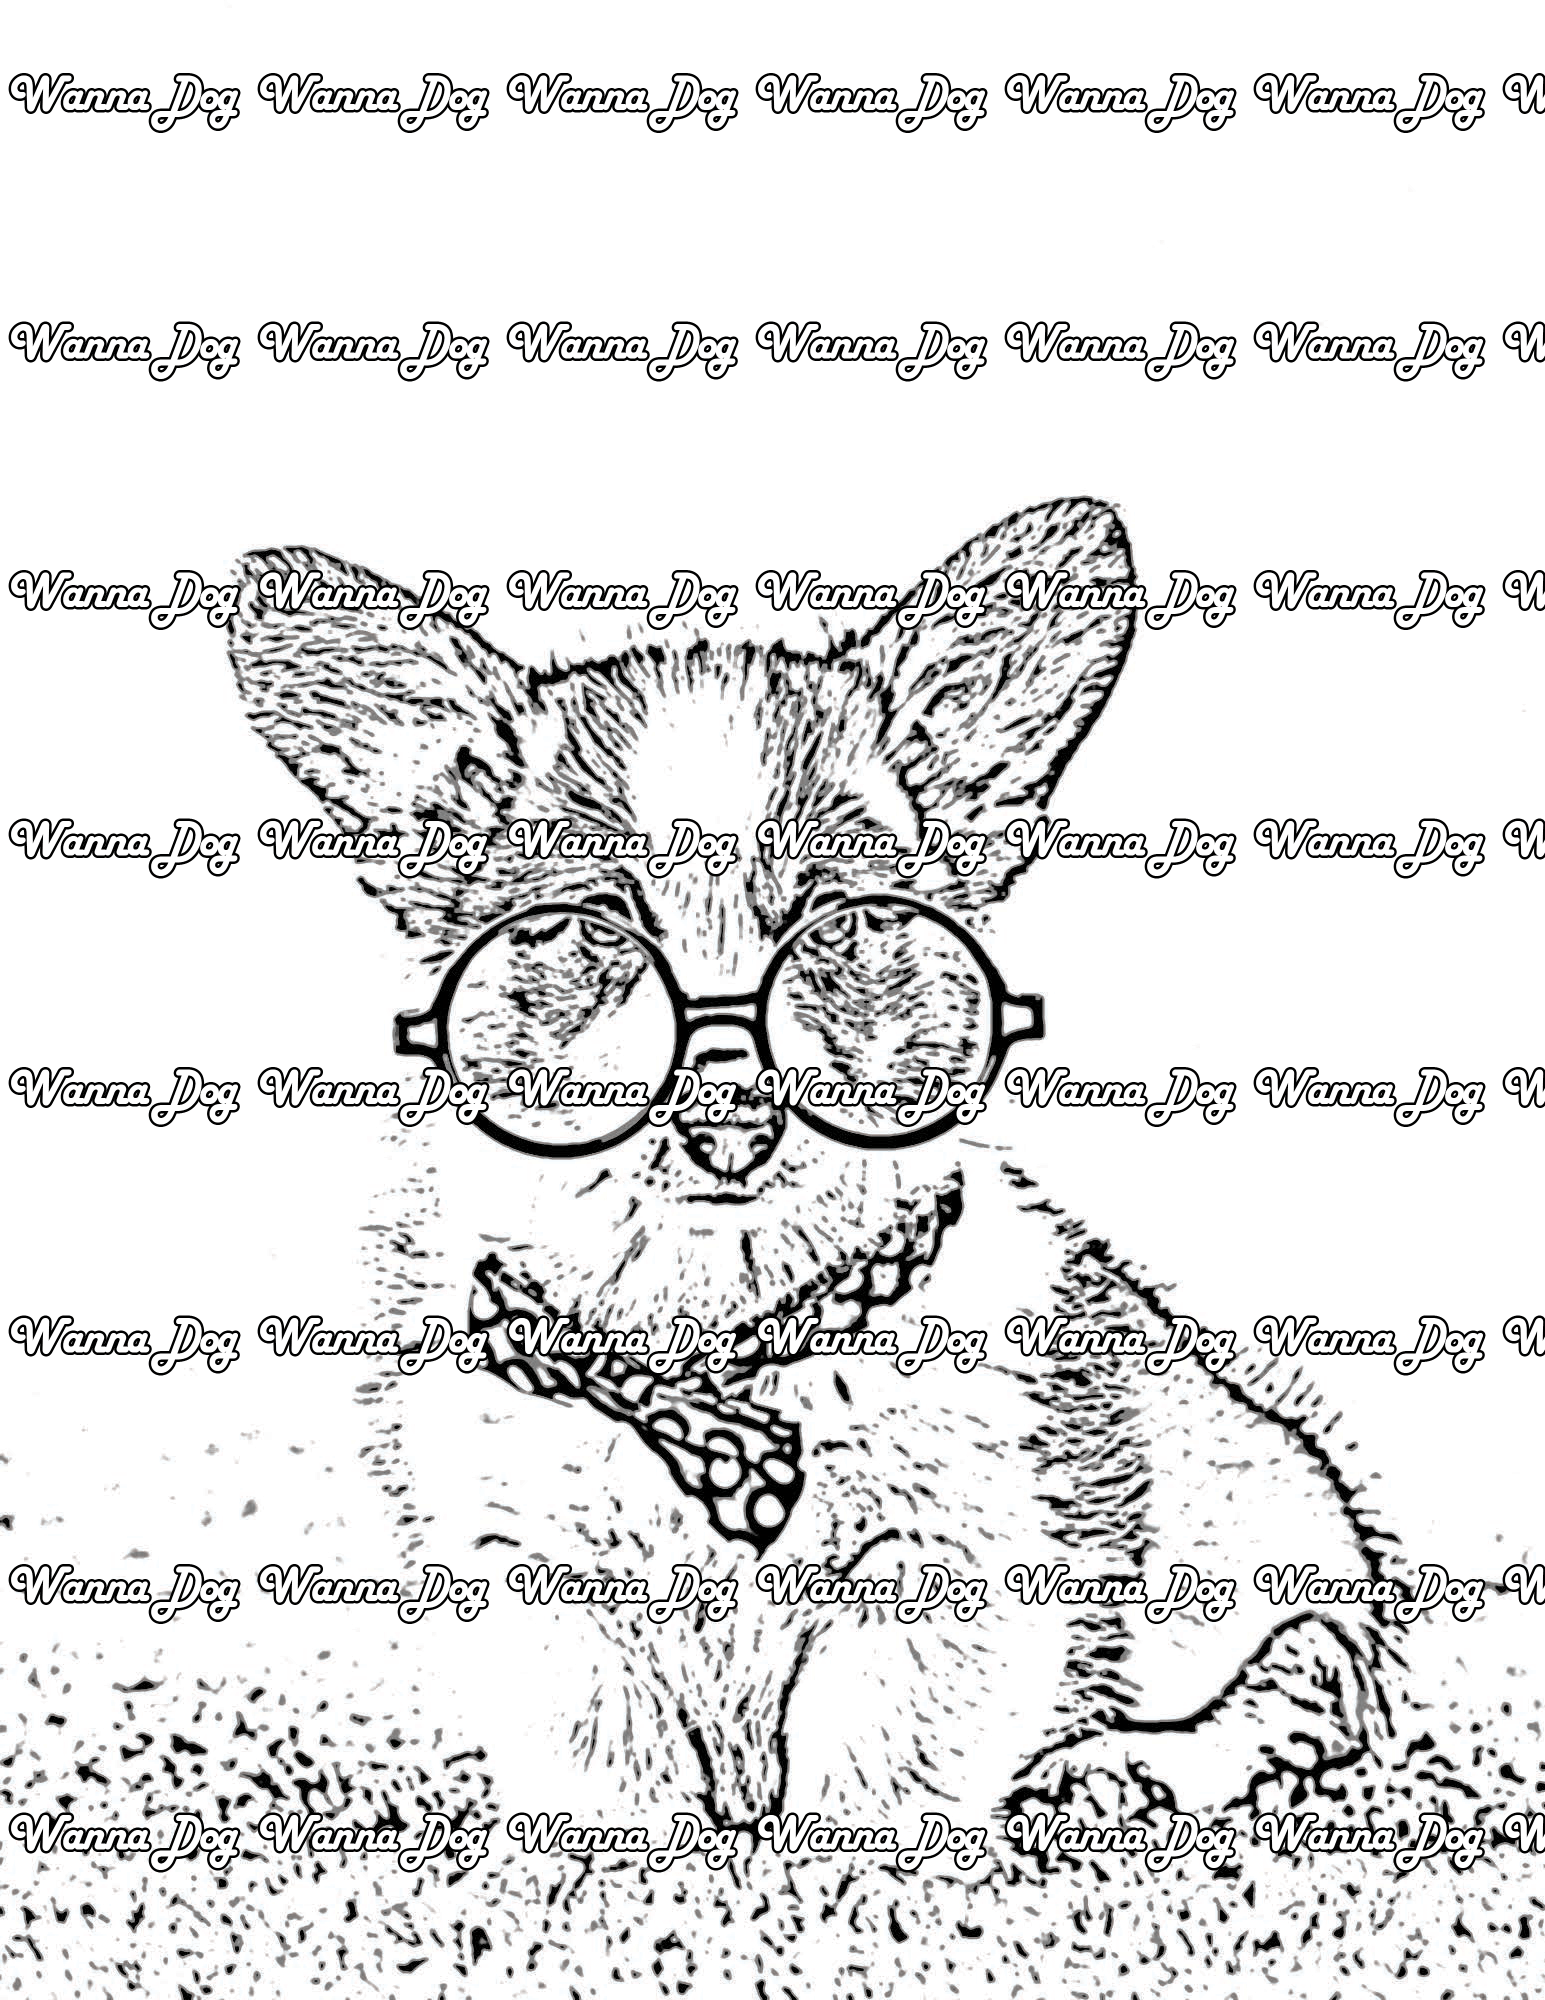 Corgi Coloring Page of a Corgi with glasses